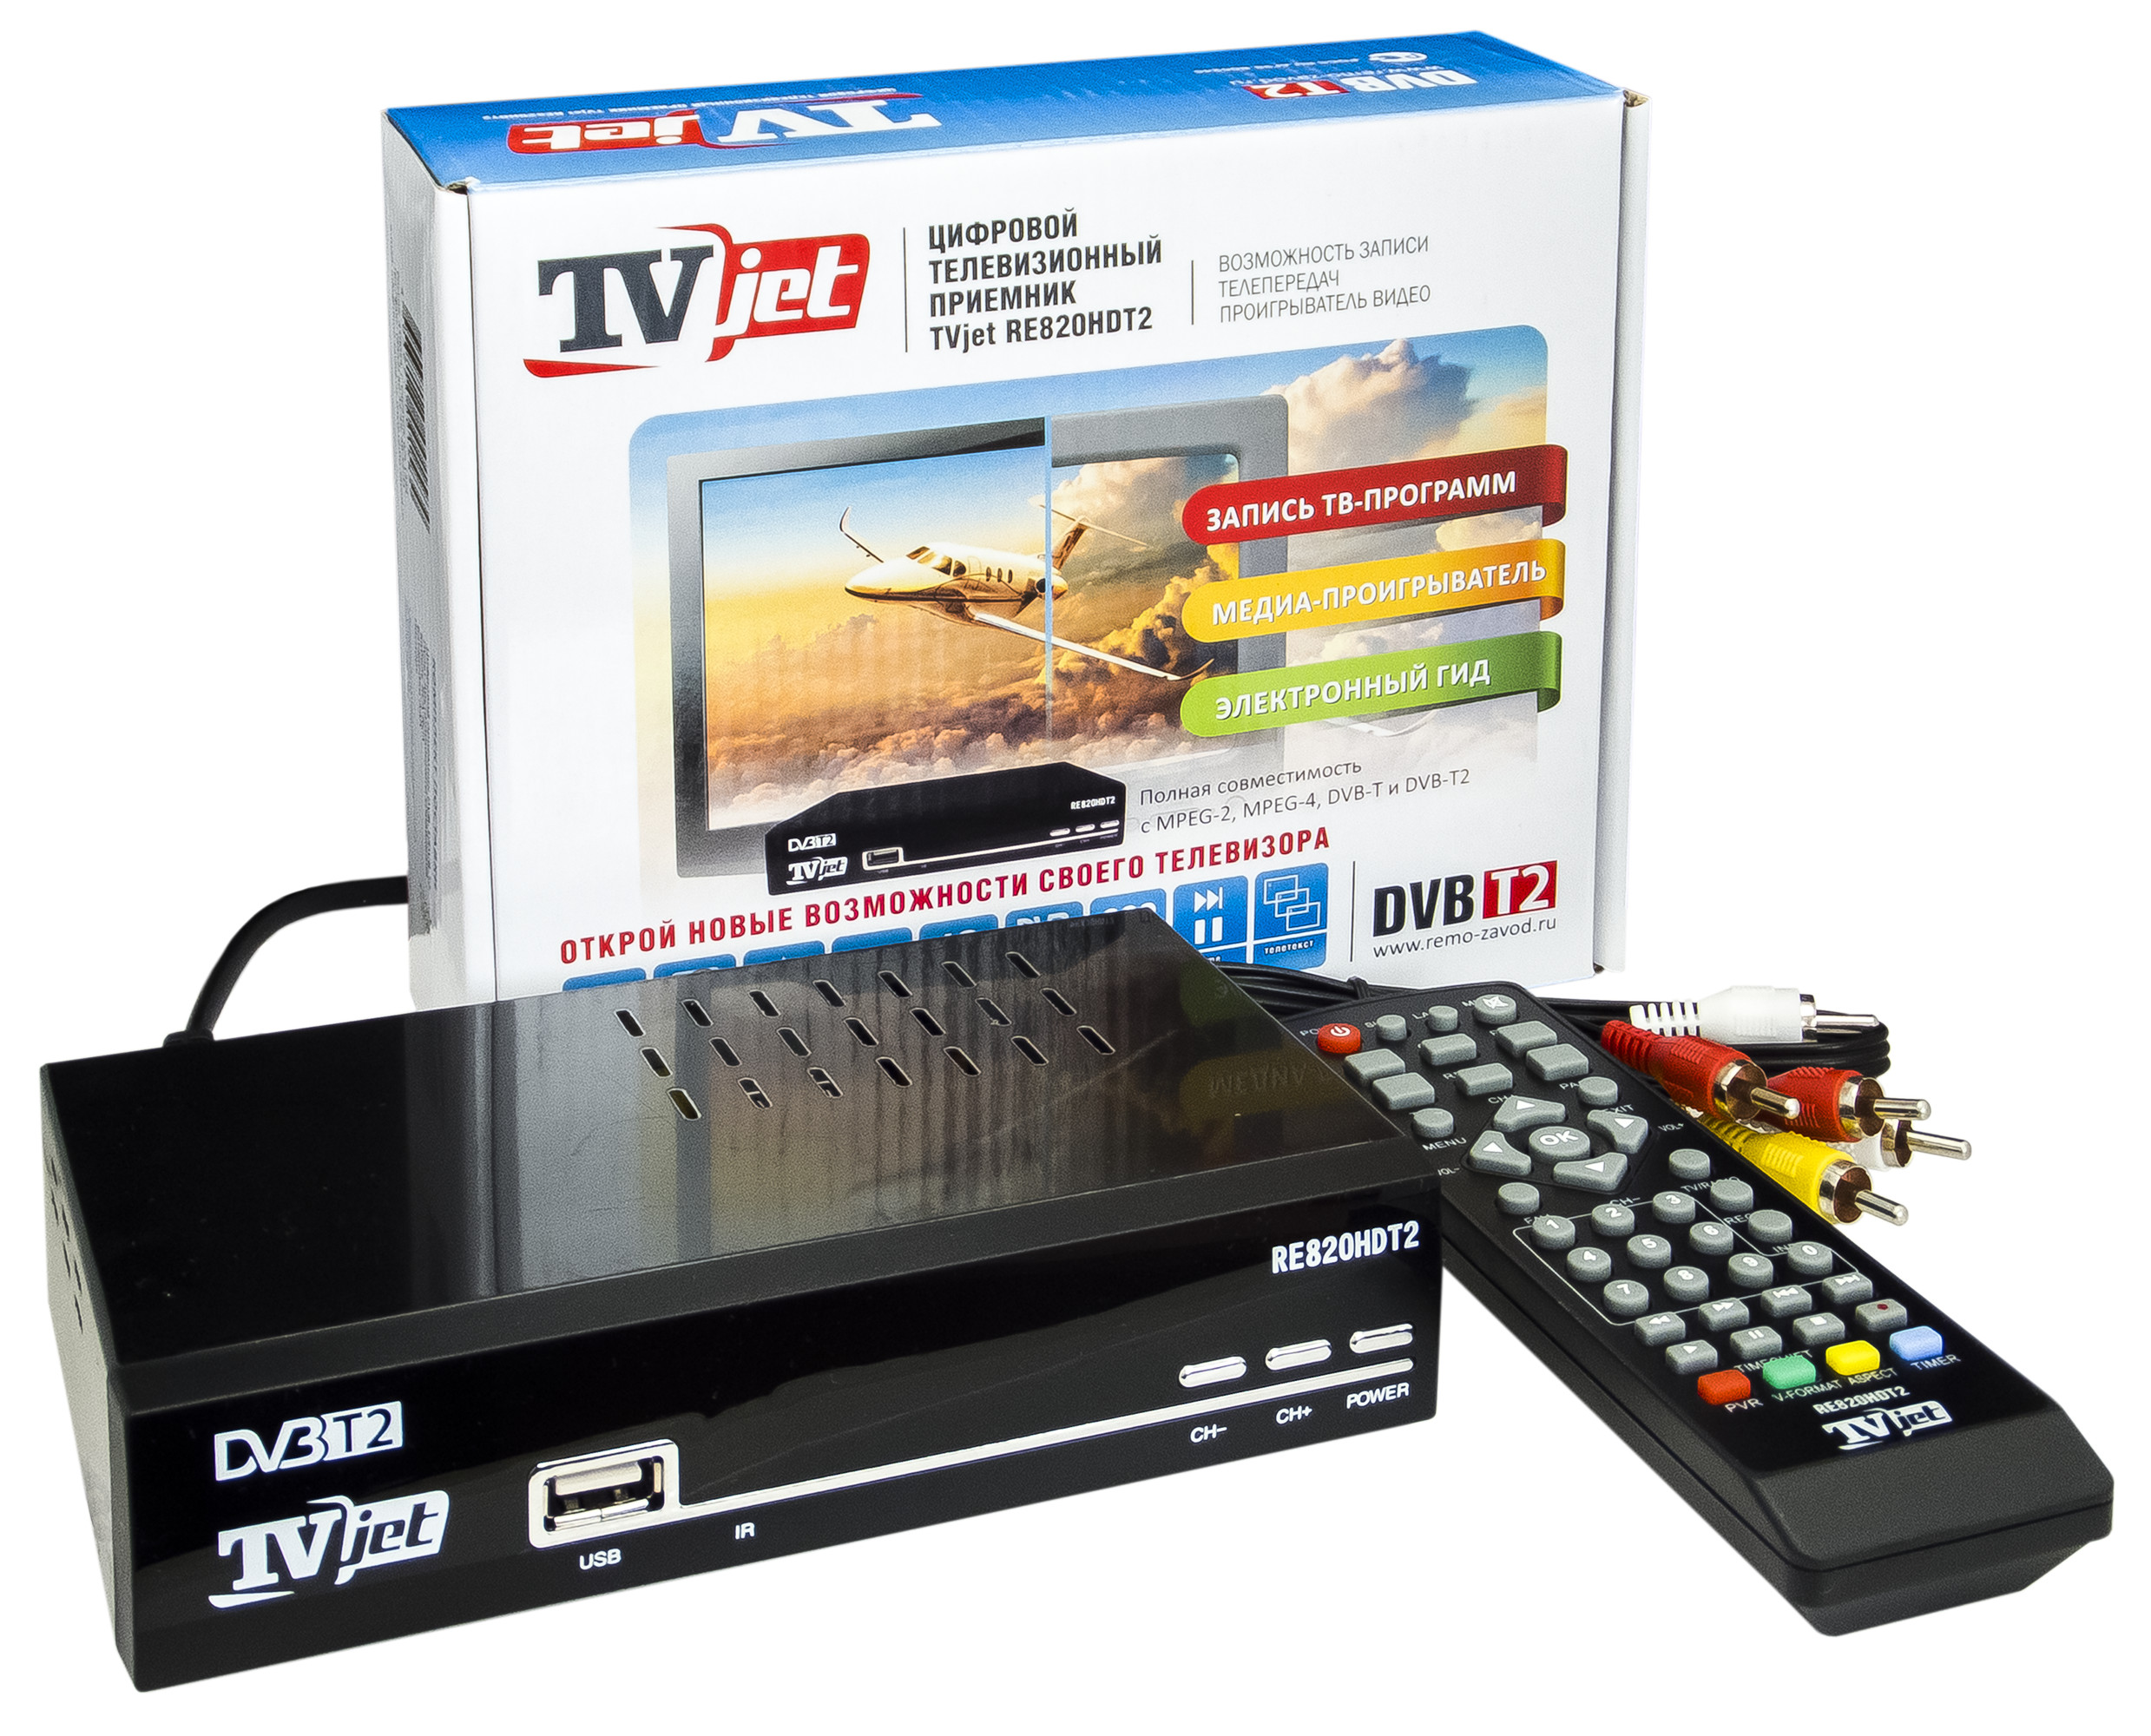 Купить приемник для телевизора. TV-тюнер РЭМО TVJET re820hdt2. Приемник цифровой MPEG DVB t2. Цифровая приставка DVB-t2. Приставка с антенной для цифрового ТВ Jet.